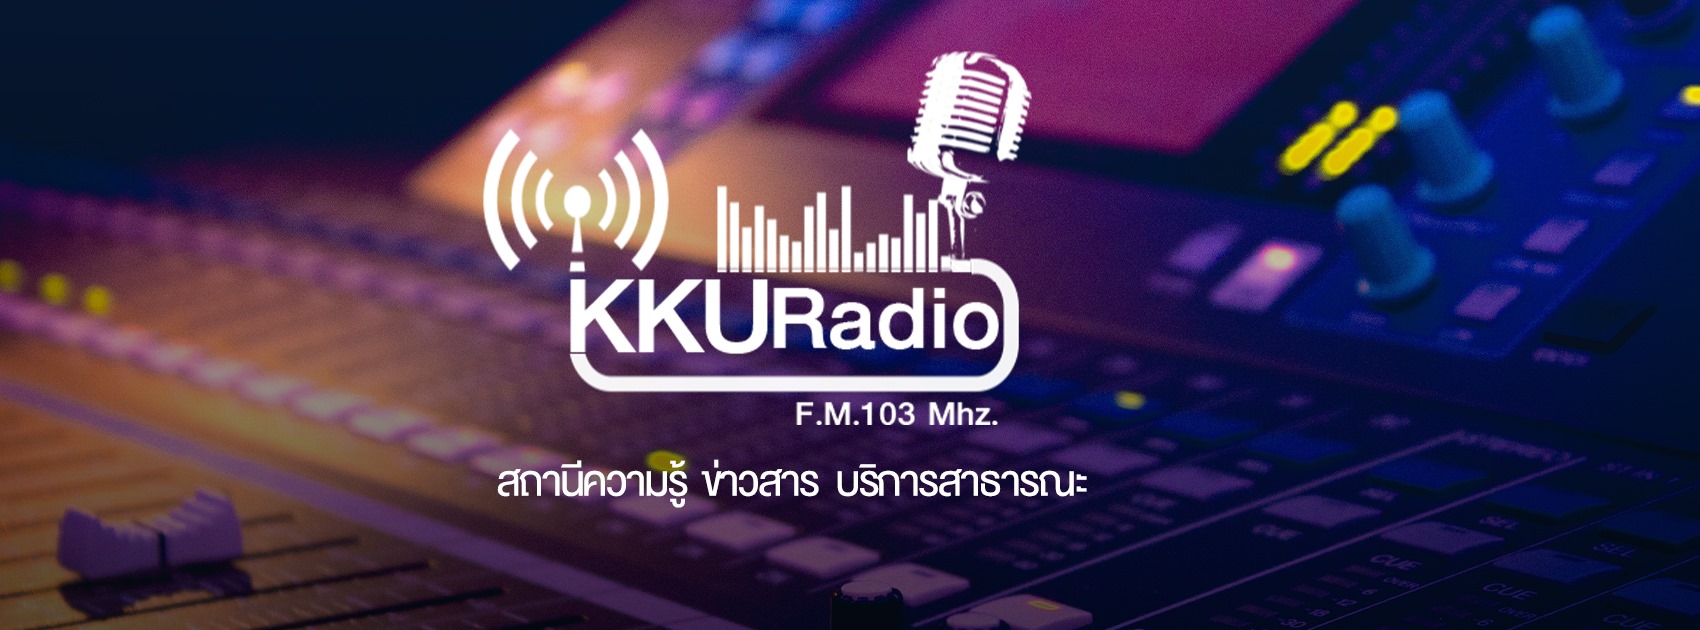 Ready go to ... https://radio.kku.ac.th [ หน้าแรก - F.M. 103 Mhz. สถานีวิทยุกระจายเสียงมหาวิทยาลัยขอนแก่น KKU Radio]